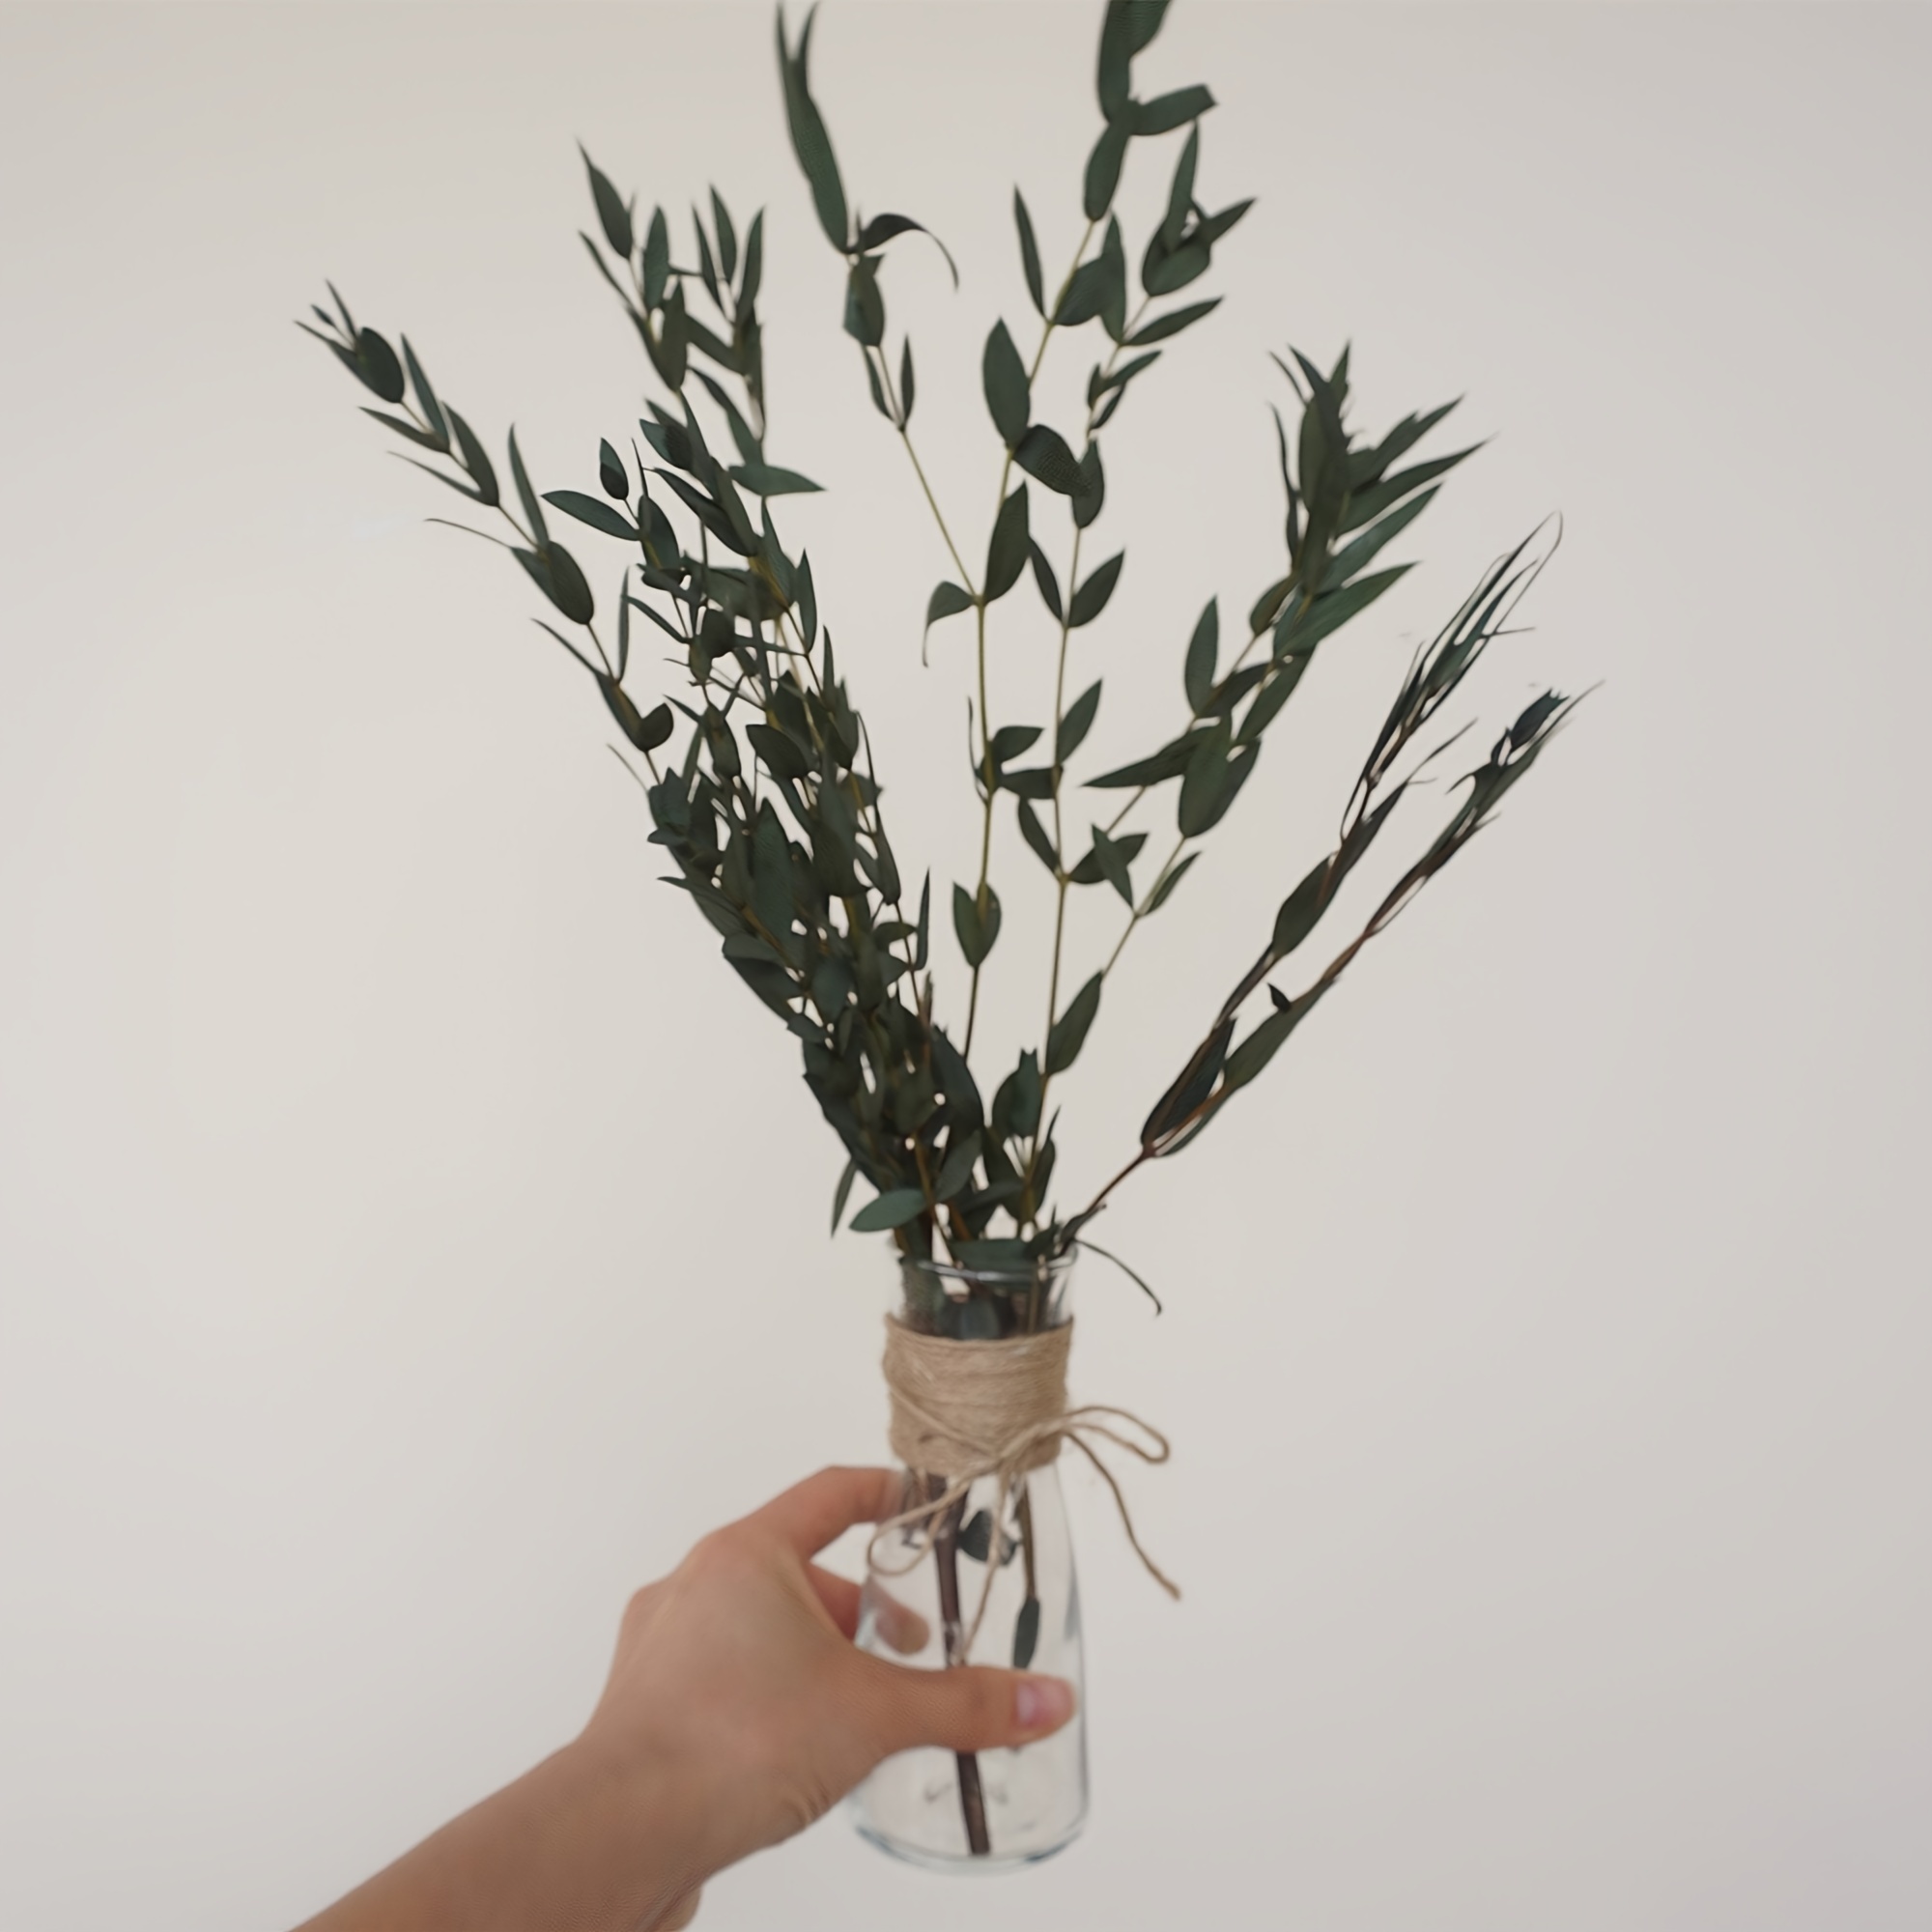 Olive Branches Greenery | Fresh Wedding Greenery | Flower Moxie